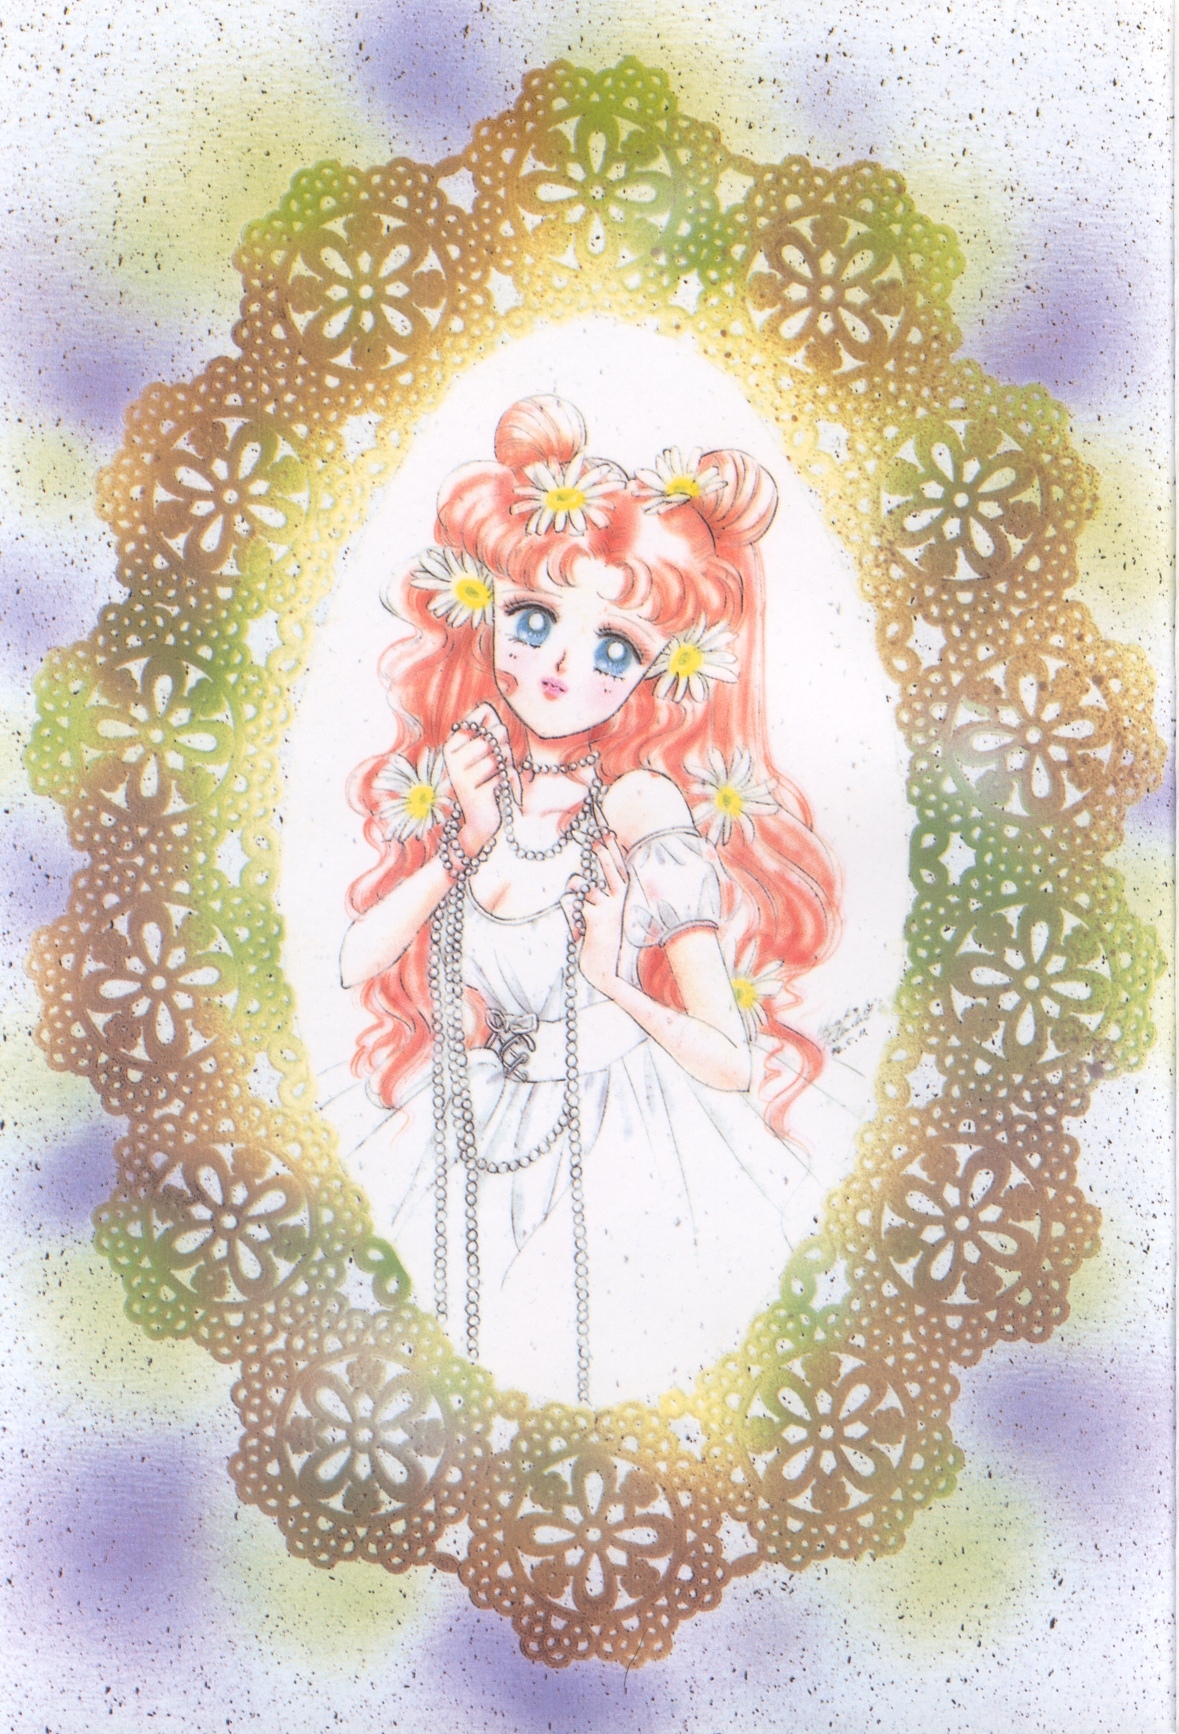 Sailor_Moon_artbook1_003.jpg